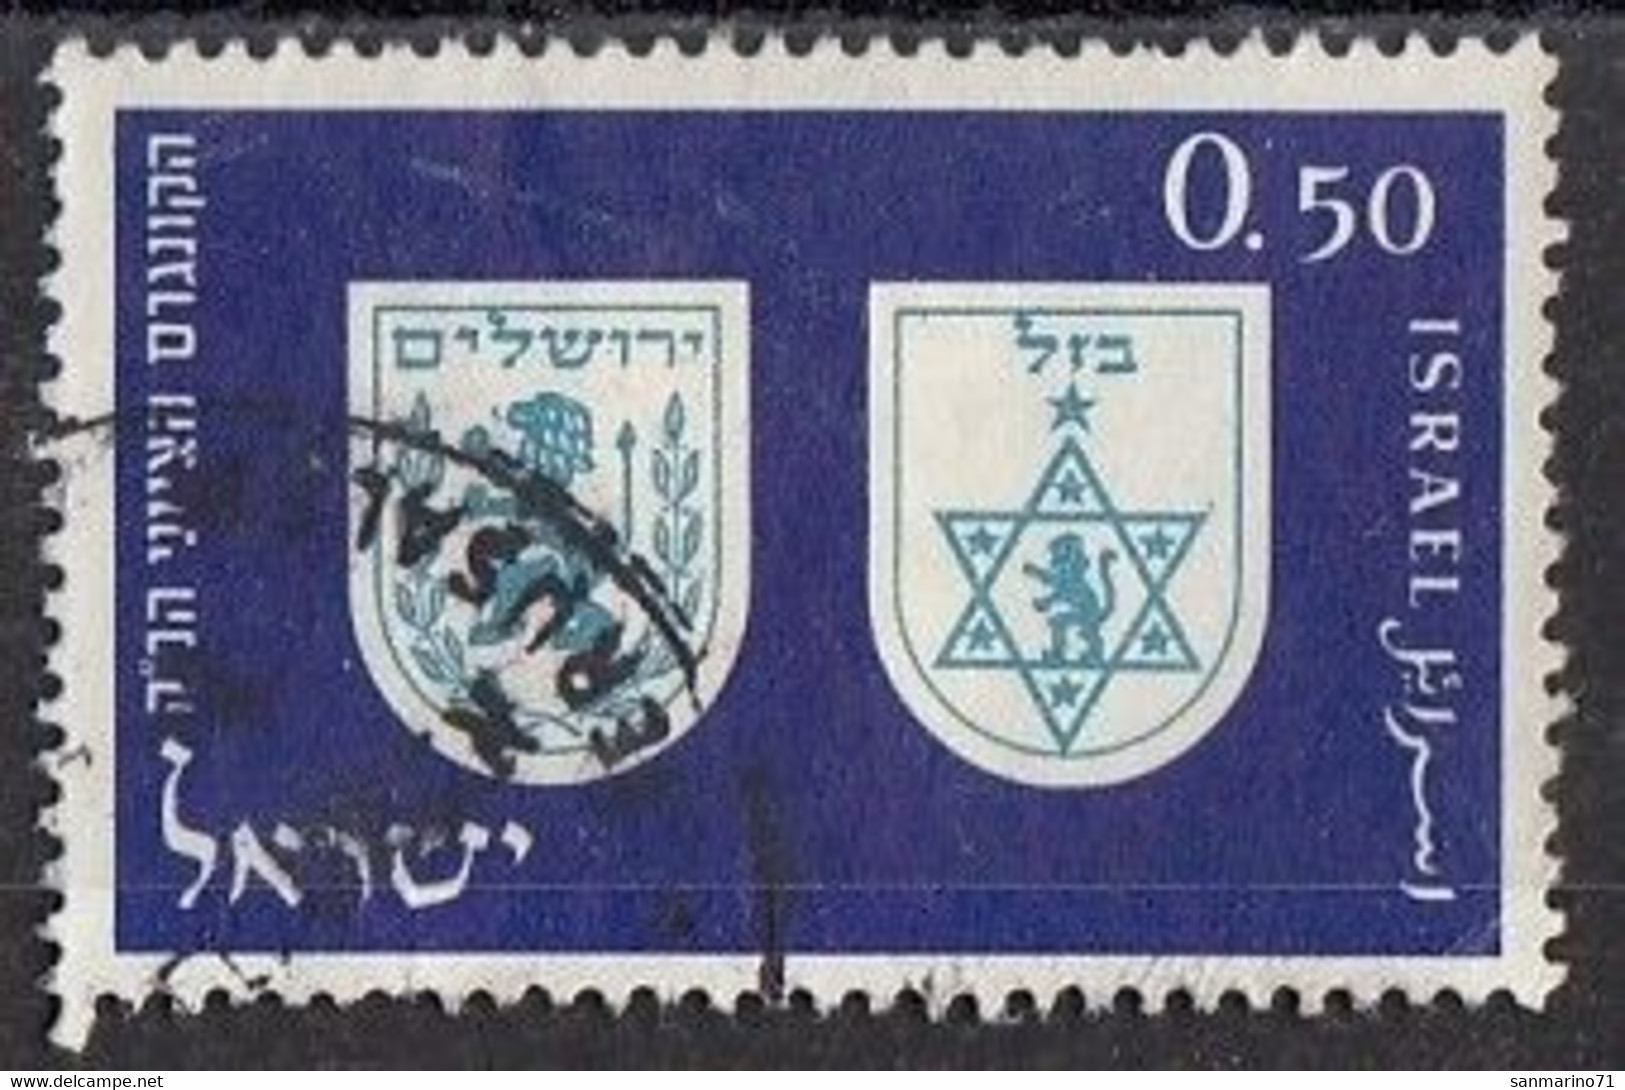 ISRAEL 222,used,falc Hinged - Oblitérés (sans Tabs)